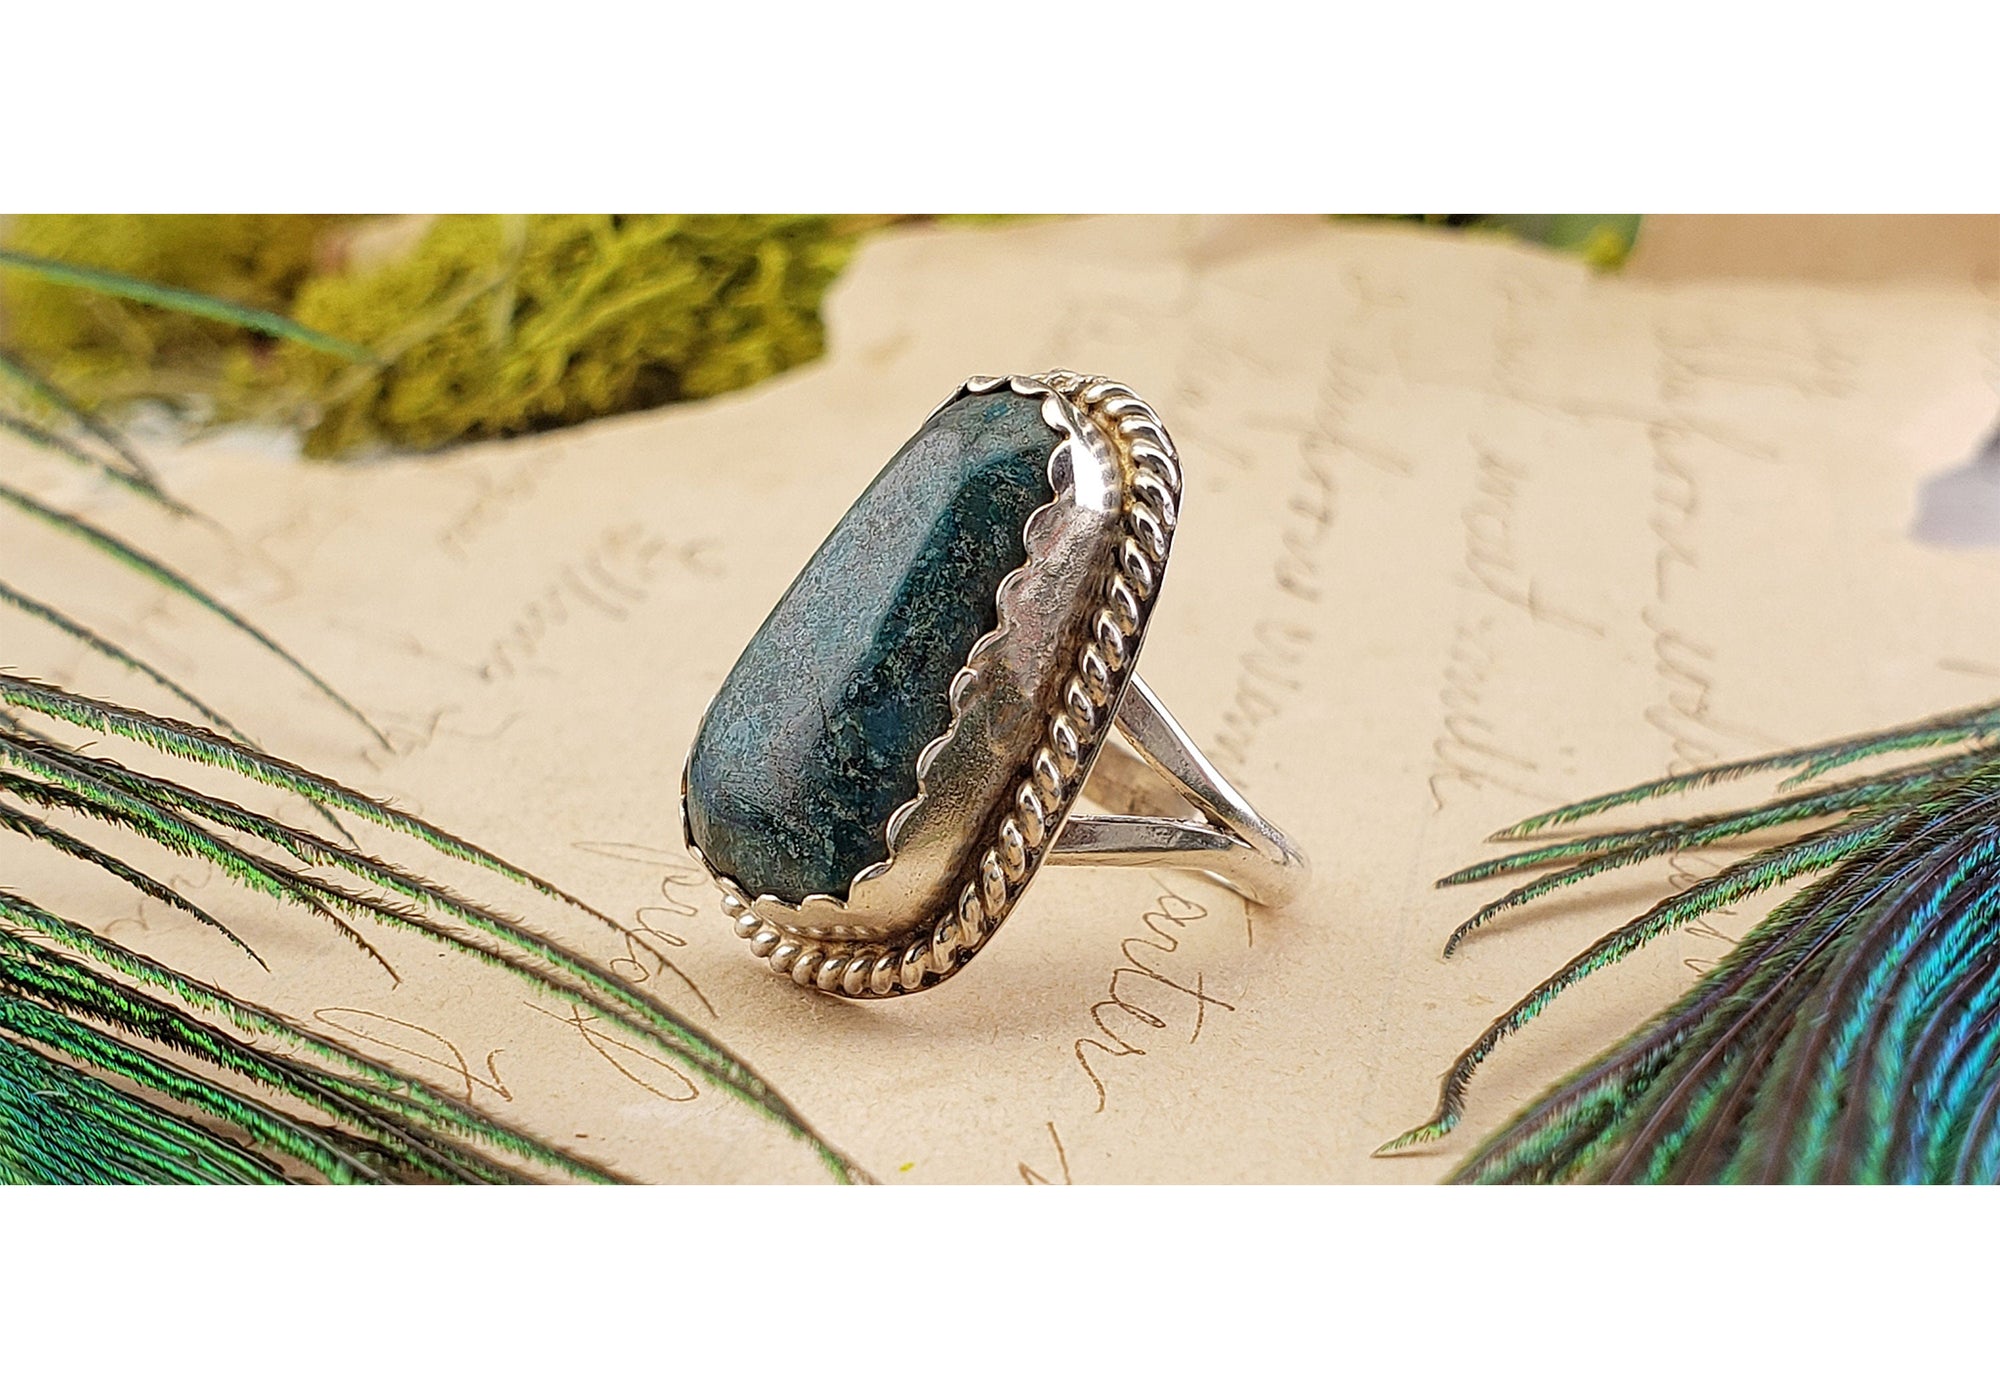 Vintage Sterling Silver Turquoise Gemstone Ring 2